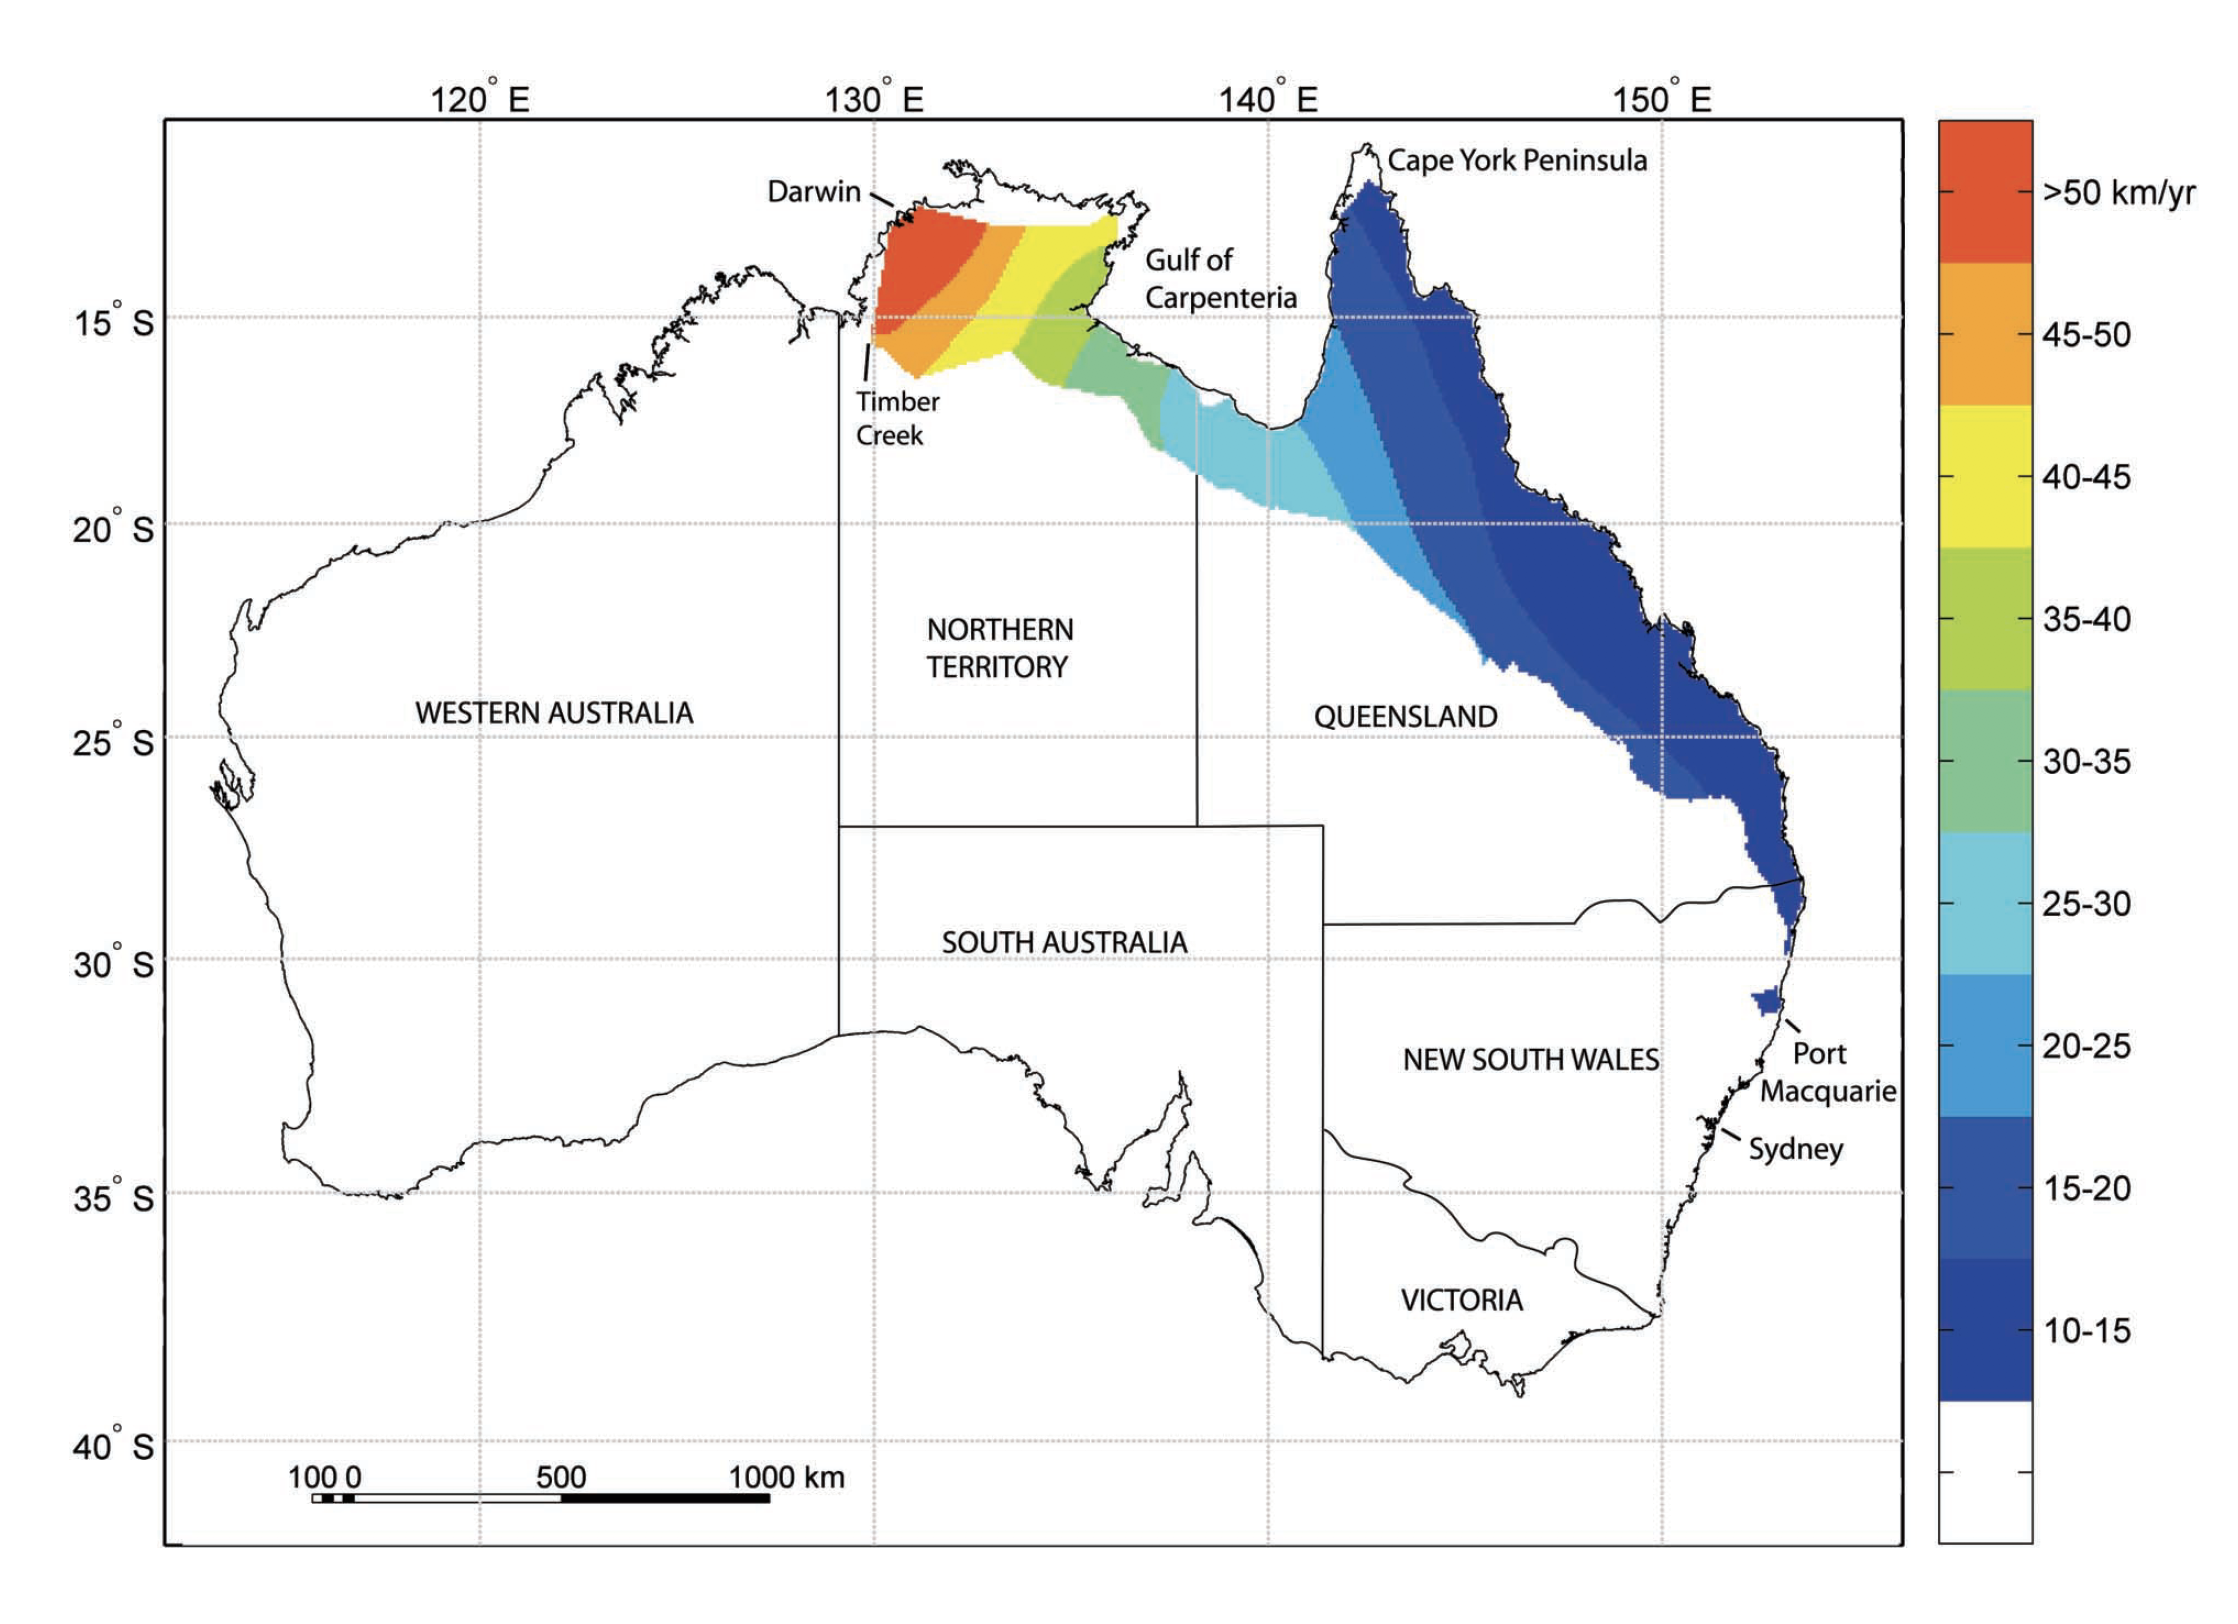 Range of Cane Toads in Australia